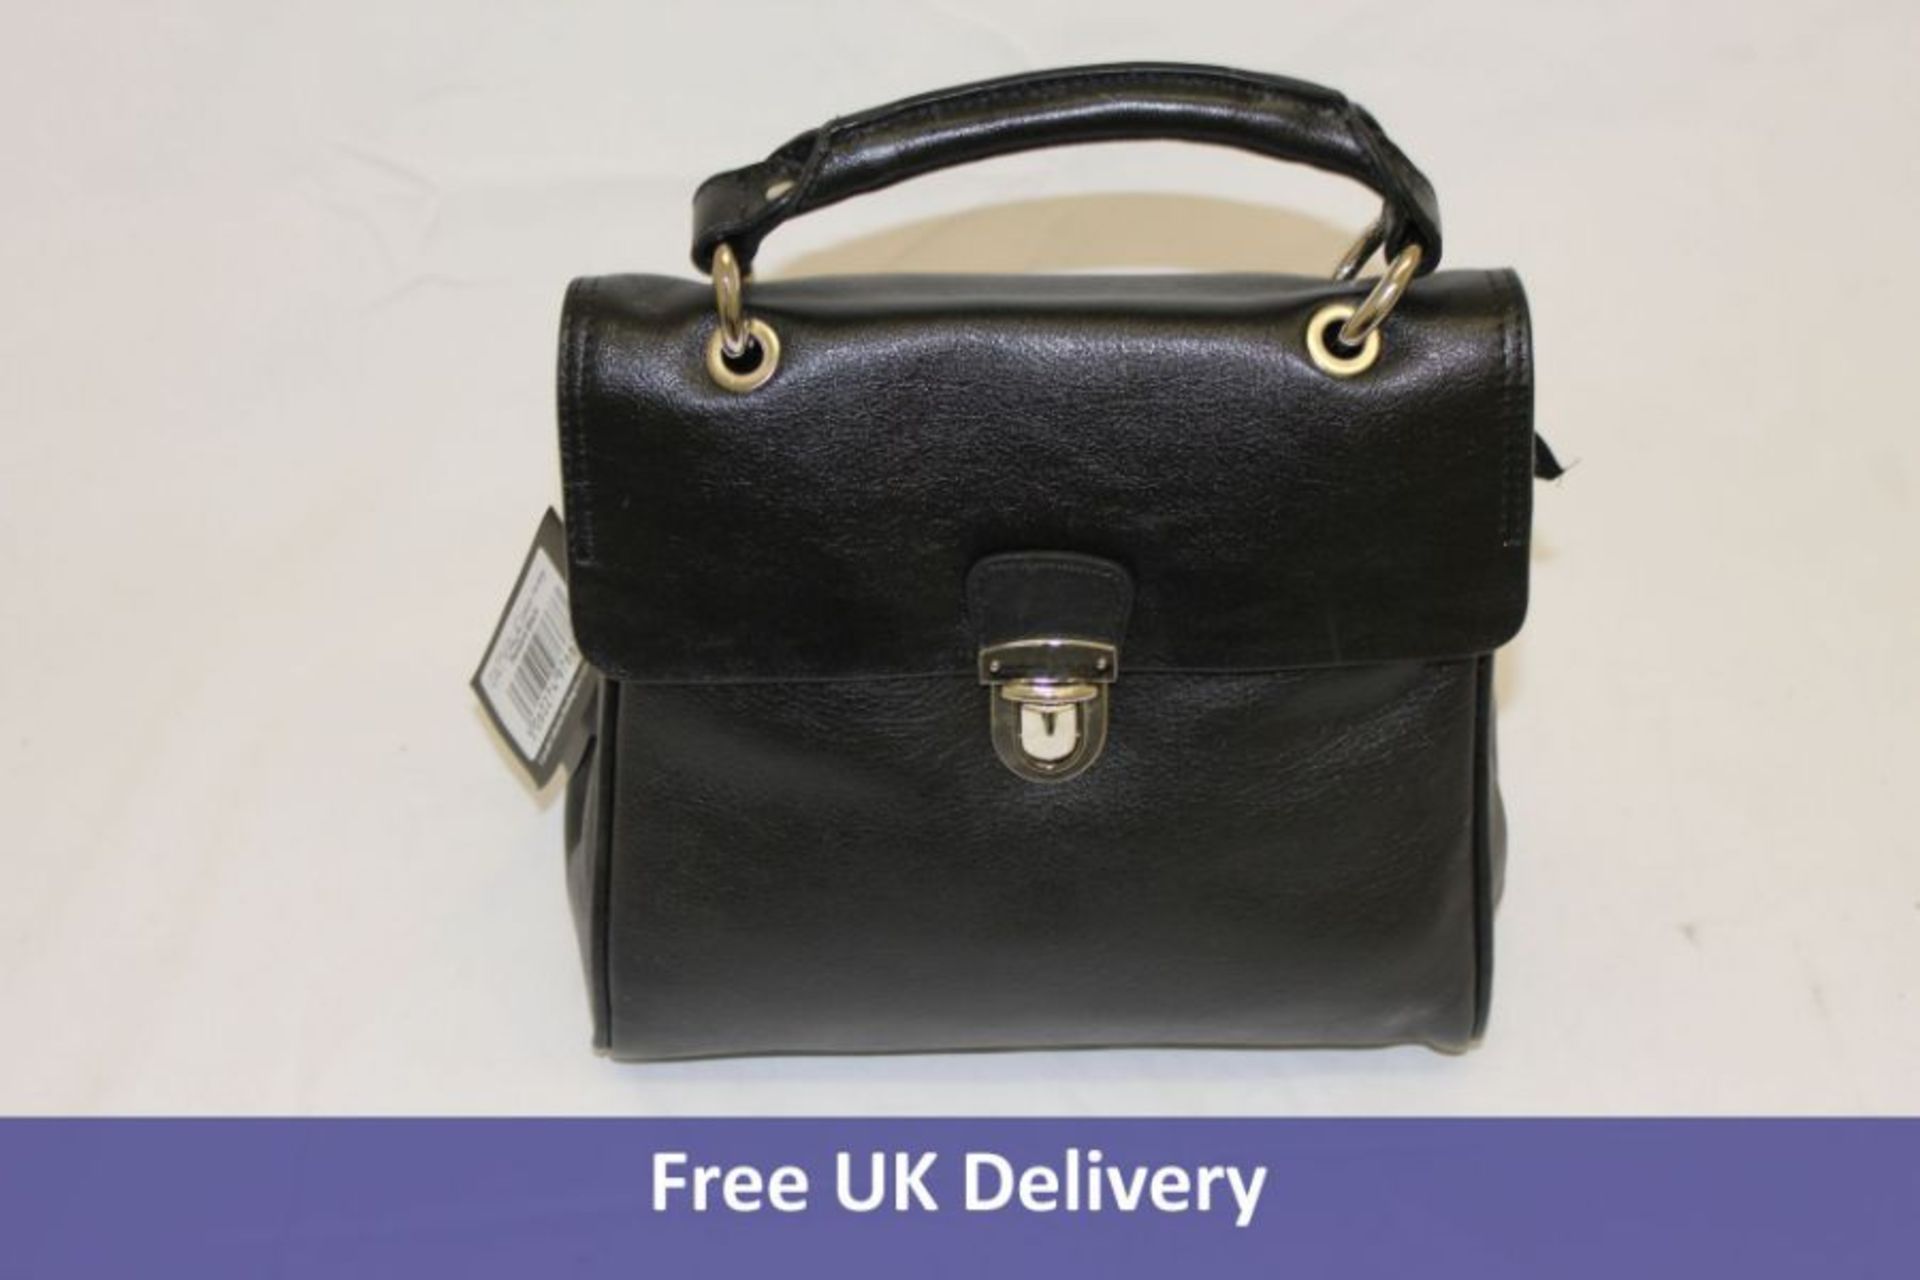 Three Catwalk Collection Handbags to include 3x Vintage Leather Handbag Shoulder, Bag/Cross Body Bag - Image 2 of 3